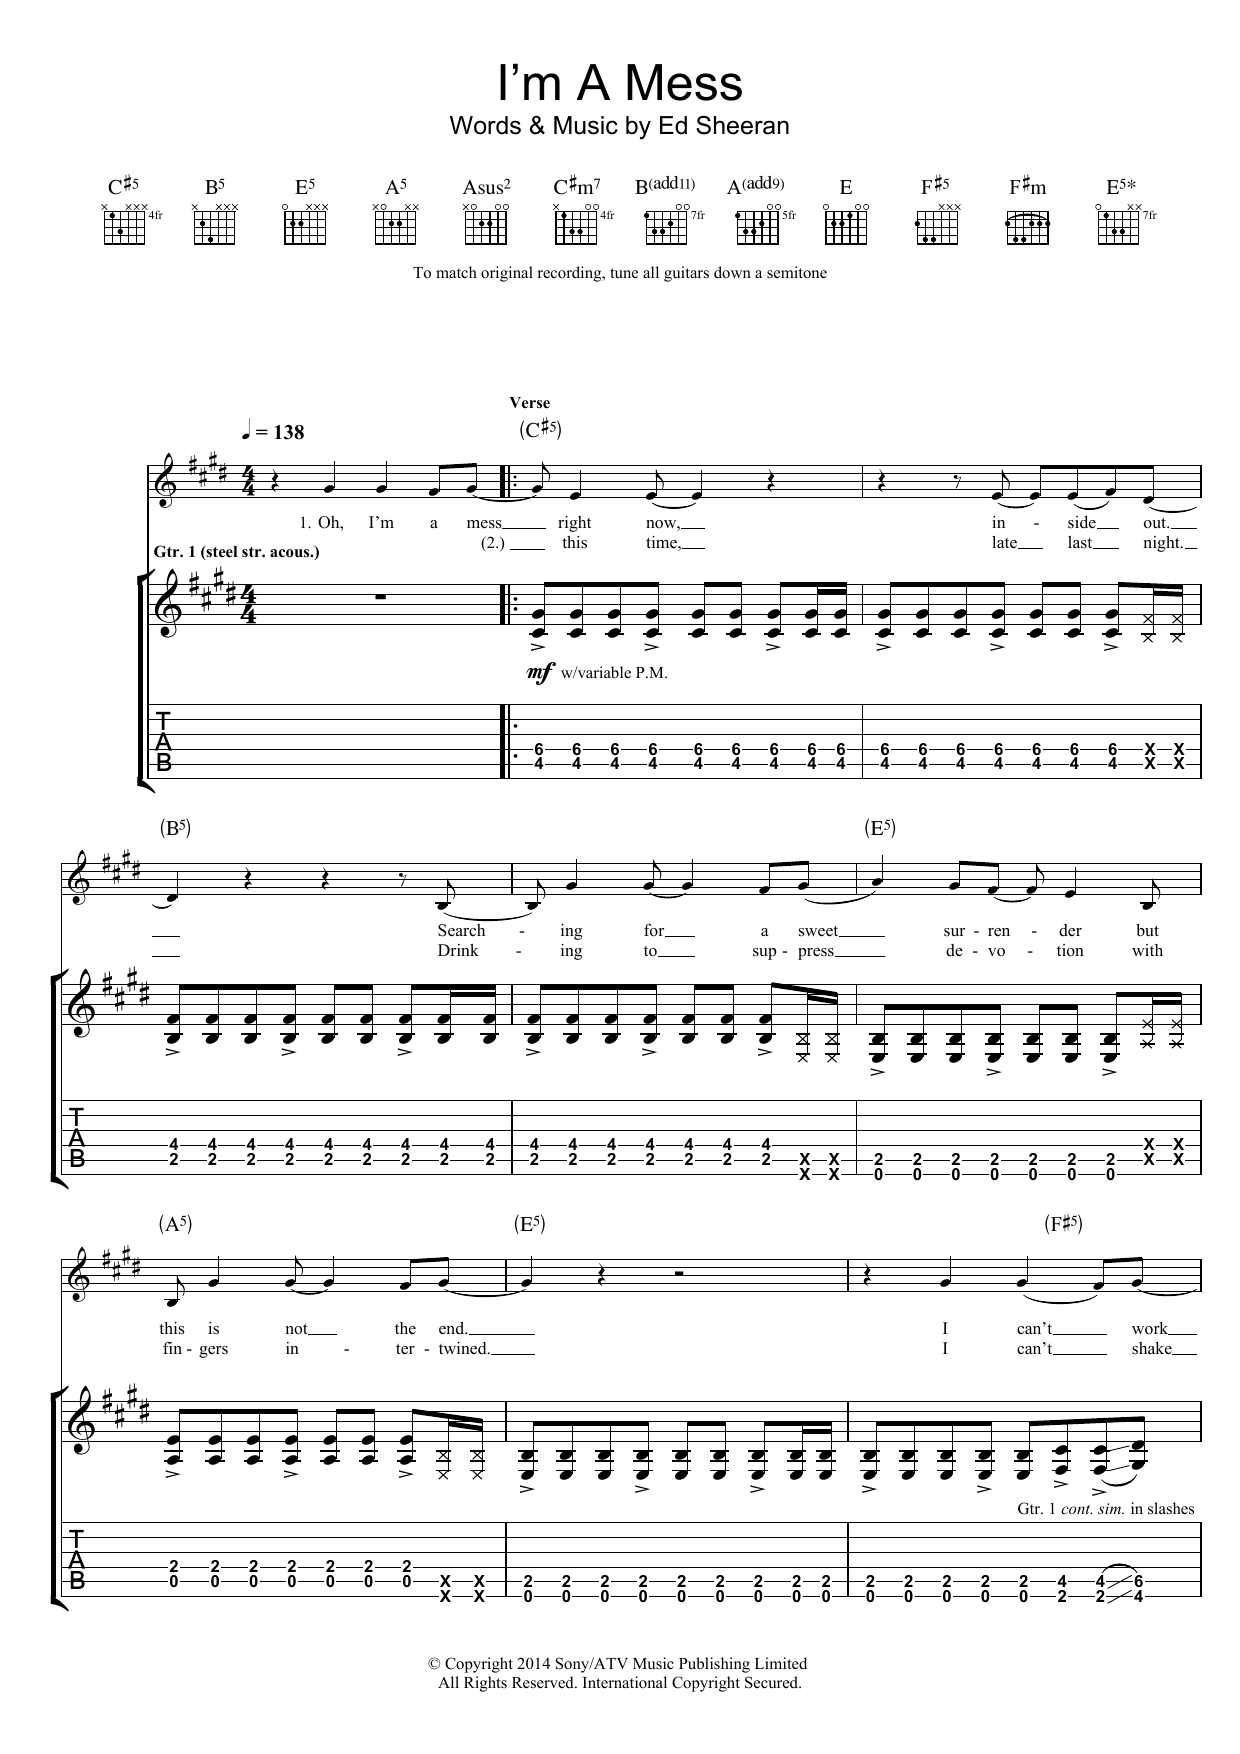 Ed Sheeran I'm A Mess Sheet Music Notes & Chords for Ukulele - Download or Print PDF